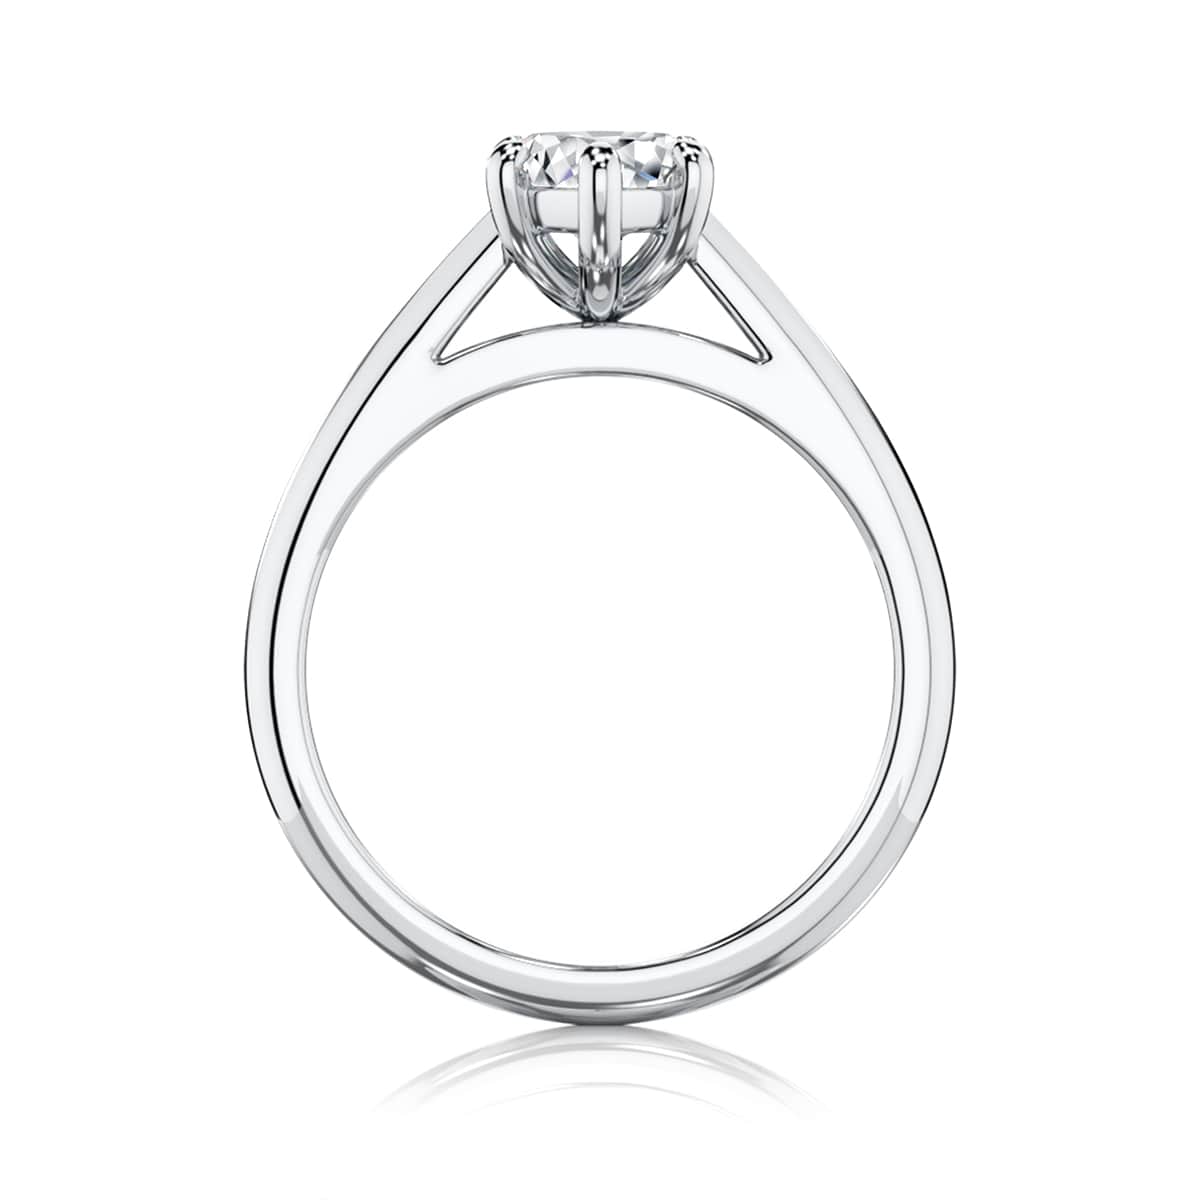 Marchesa Marquise Solitaire Diamond Engagement Ring in Platinum